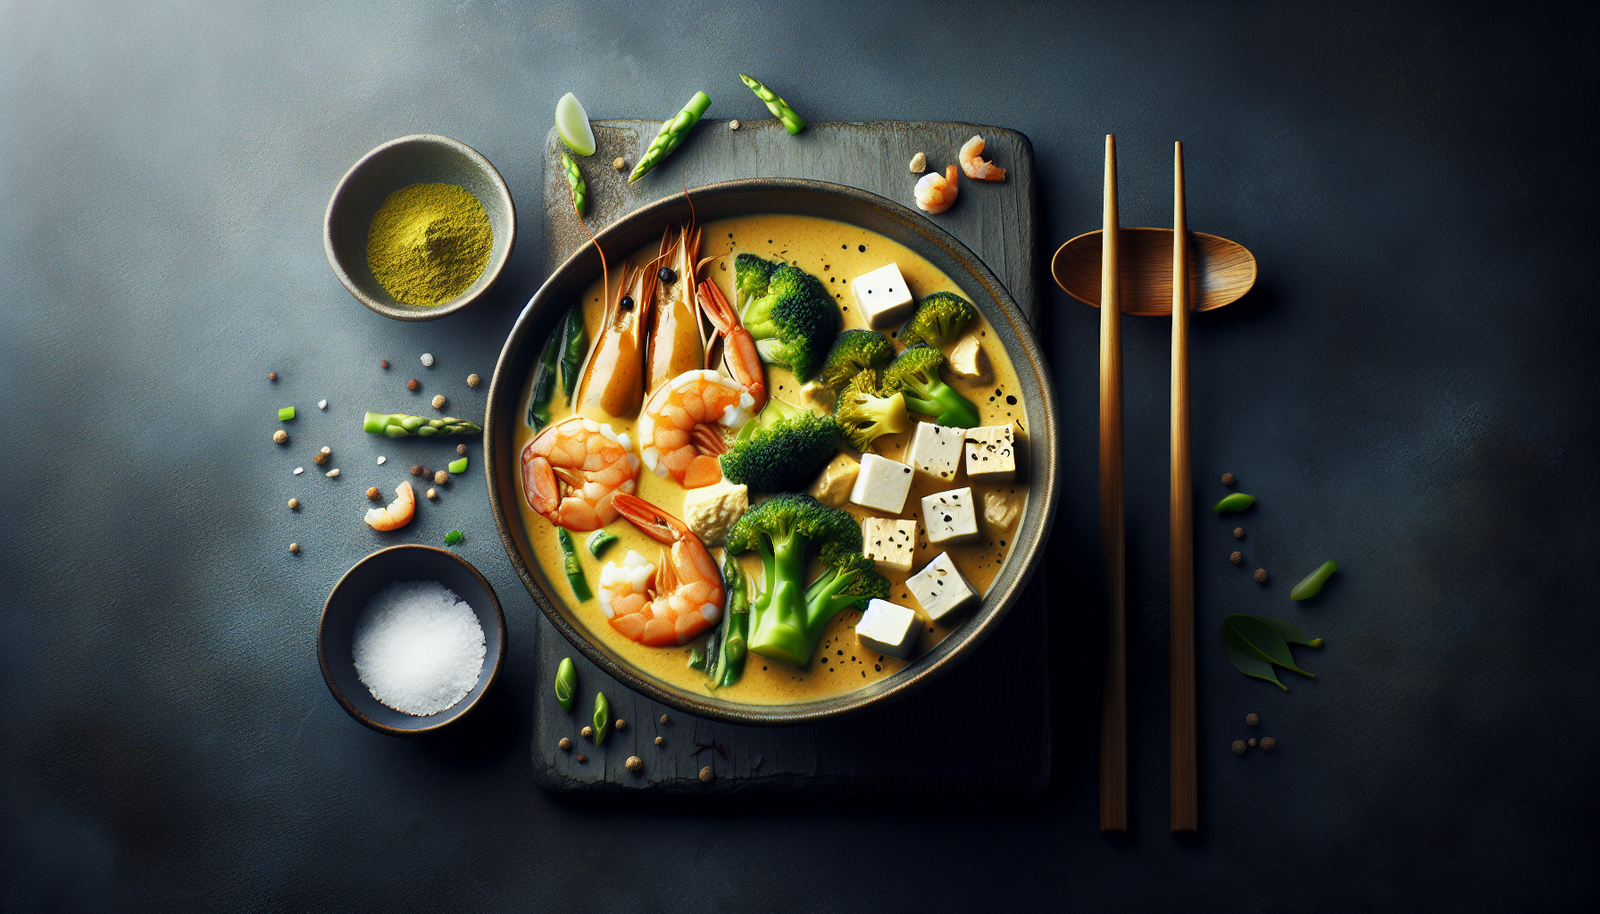 Coconut curry with shrimp, tofu, broccoli – Tony’s Kitchen